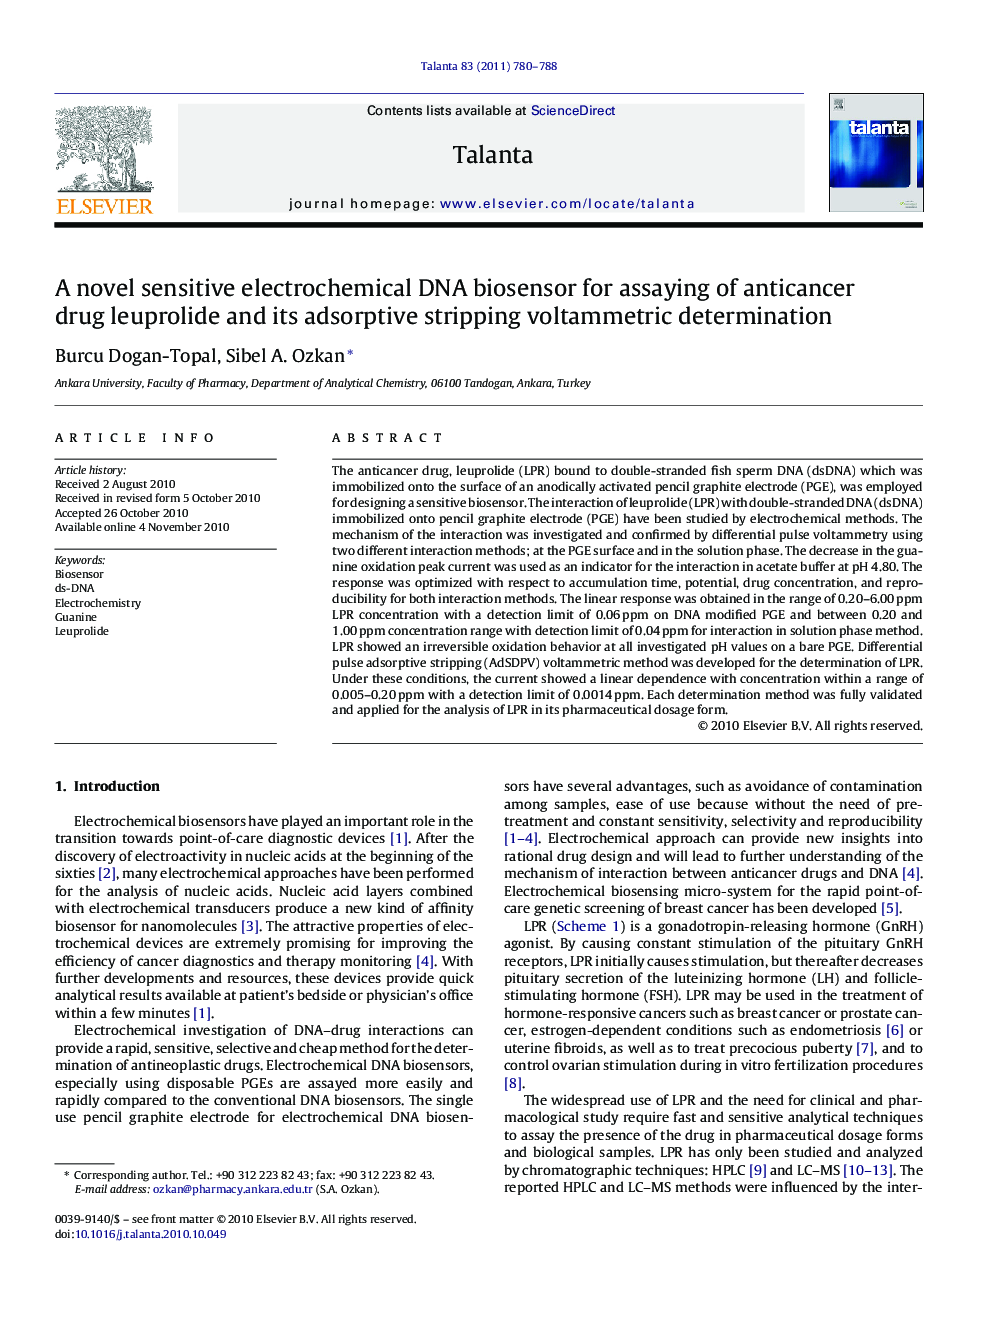 A novel sensitive electrochemical DNA biosensor for assaying of anticancer drug leuprolide and its adsorptive stripping voltammetric determination